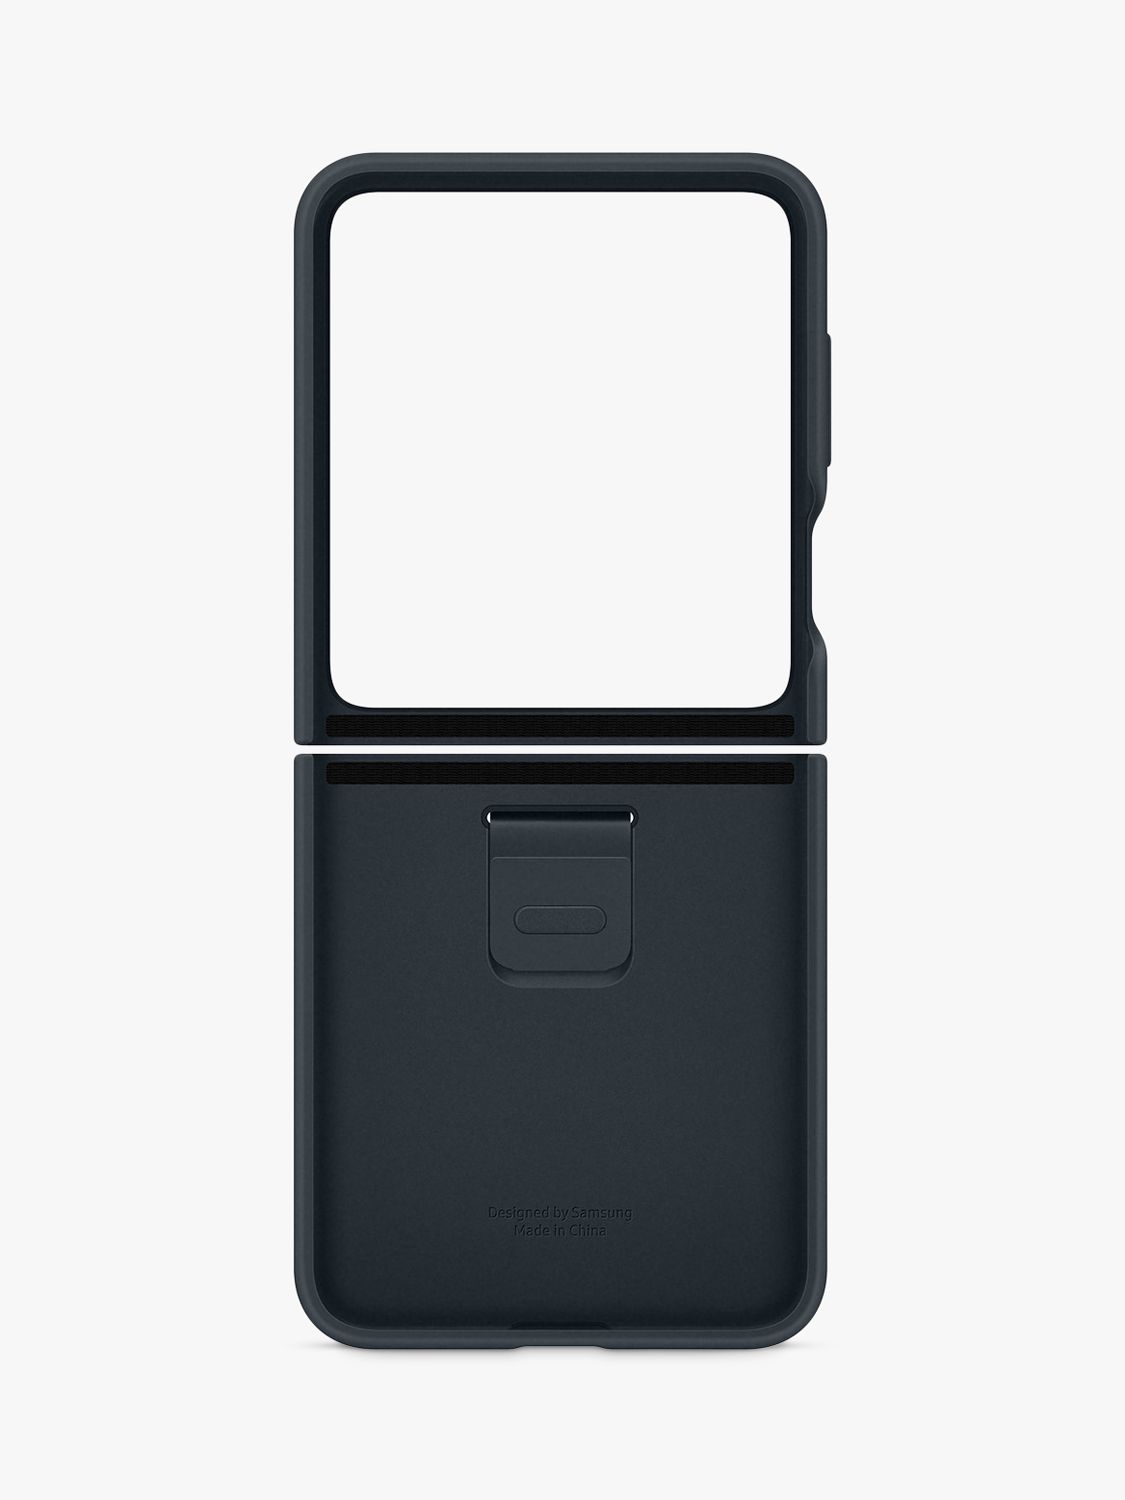 MICHAEL KORS LOGO BLACK Samsung Galaxy Z Flip 3 Case Cover